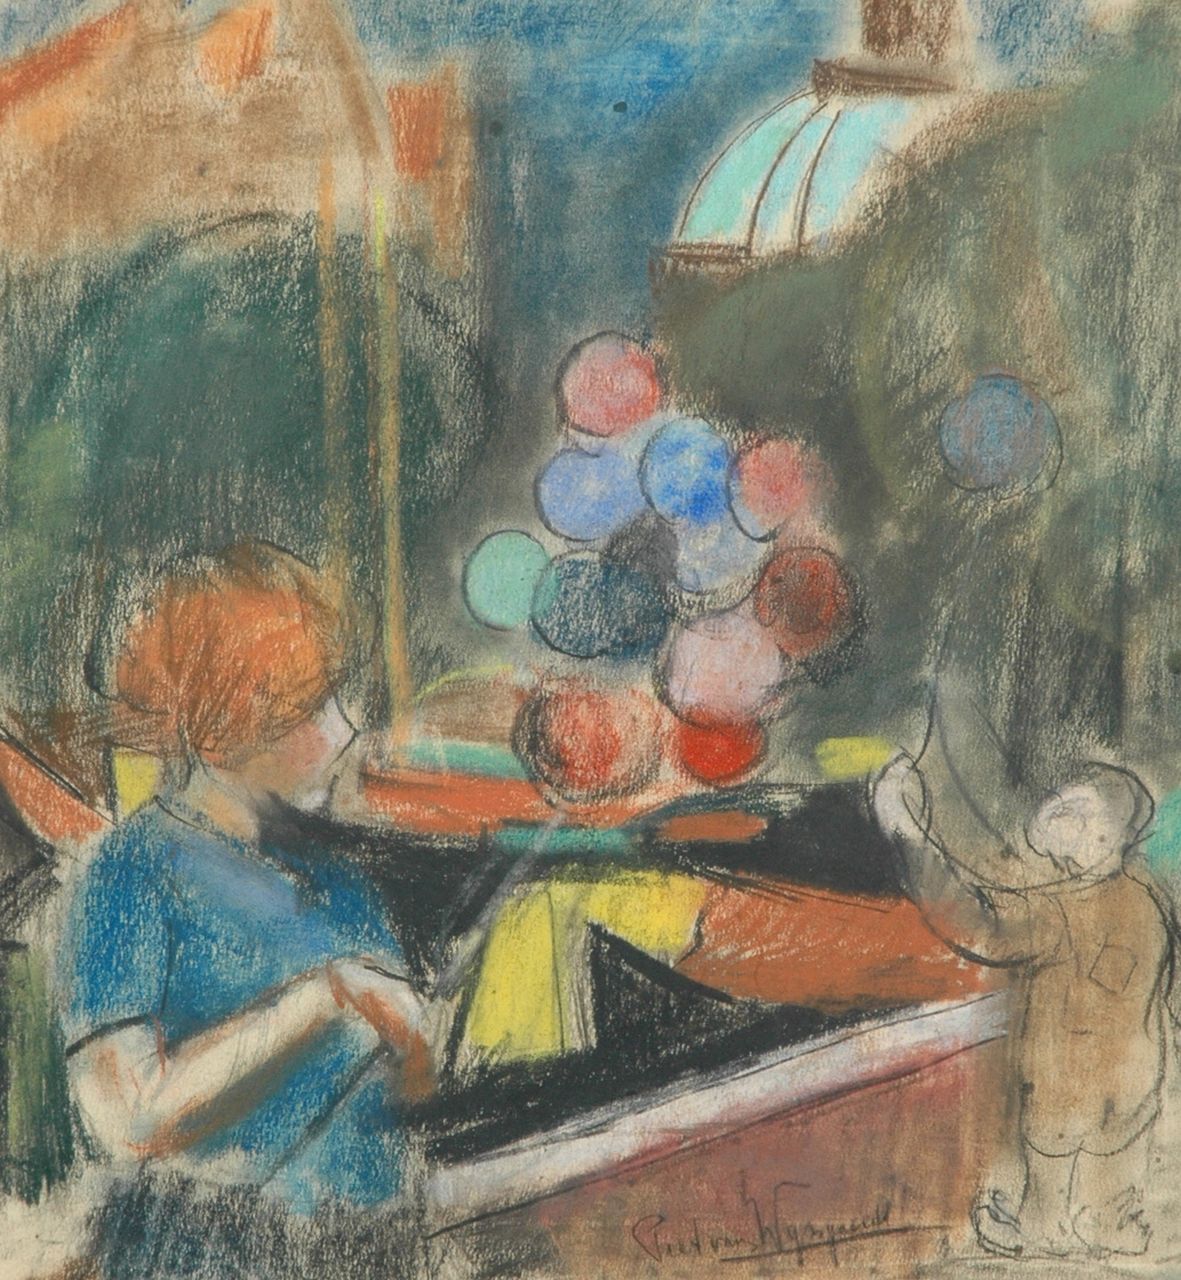 Wijngaerdt P.T. van | Petrus Theodorus 'Piet' van Wijngaerdt, A child and a balloon saleswoman, pastel on paper 36.8 x 34.7 cm, signed l.r.